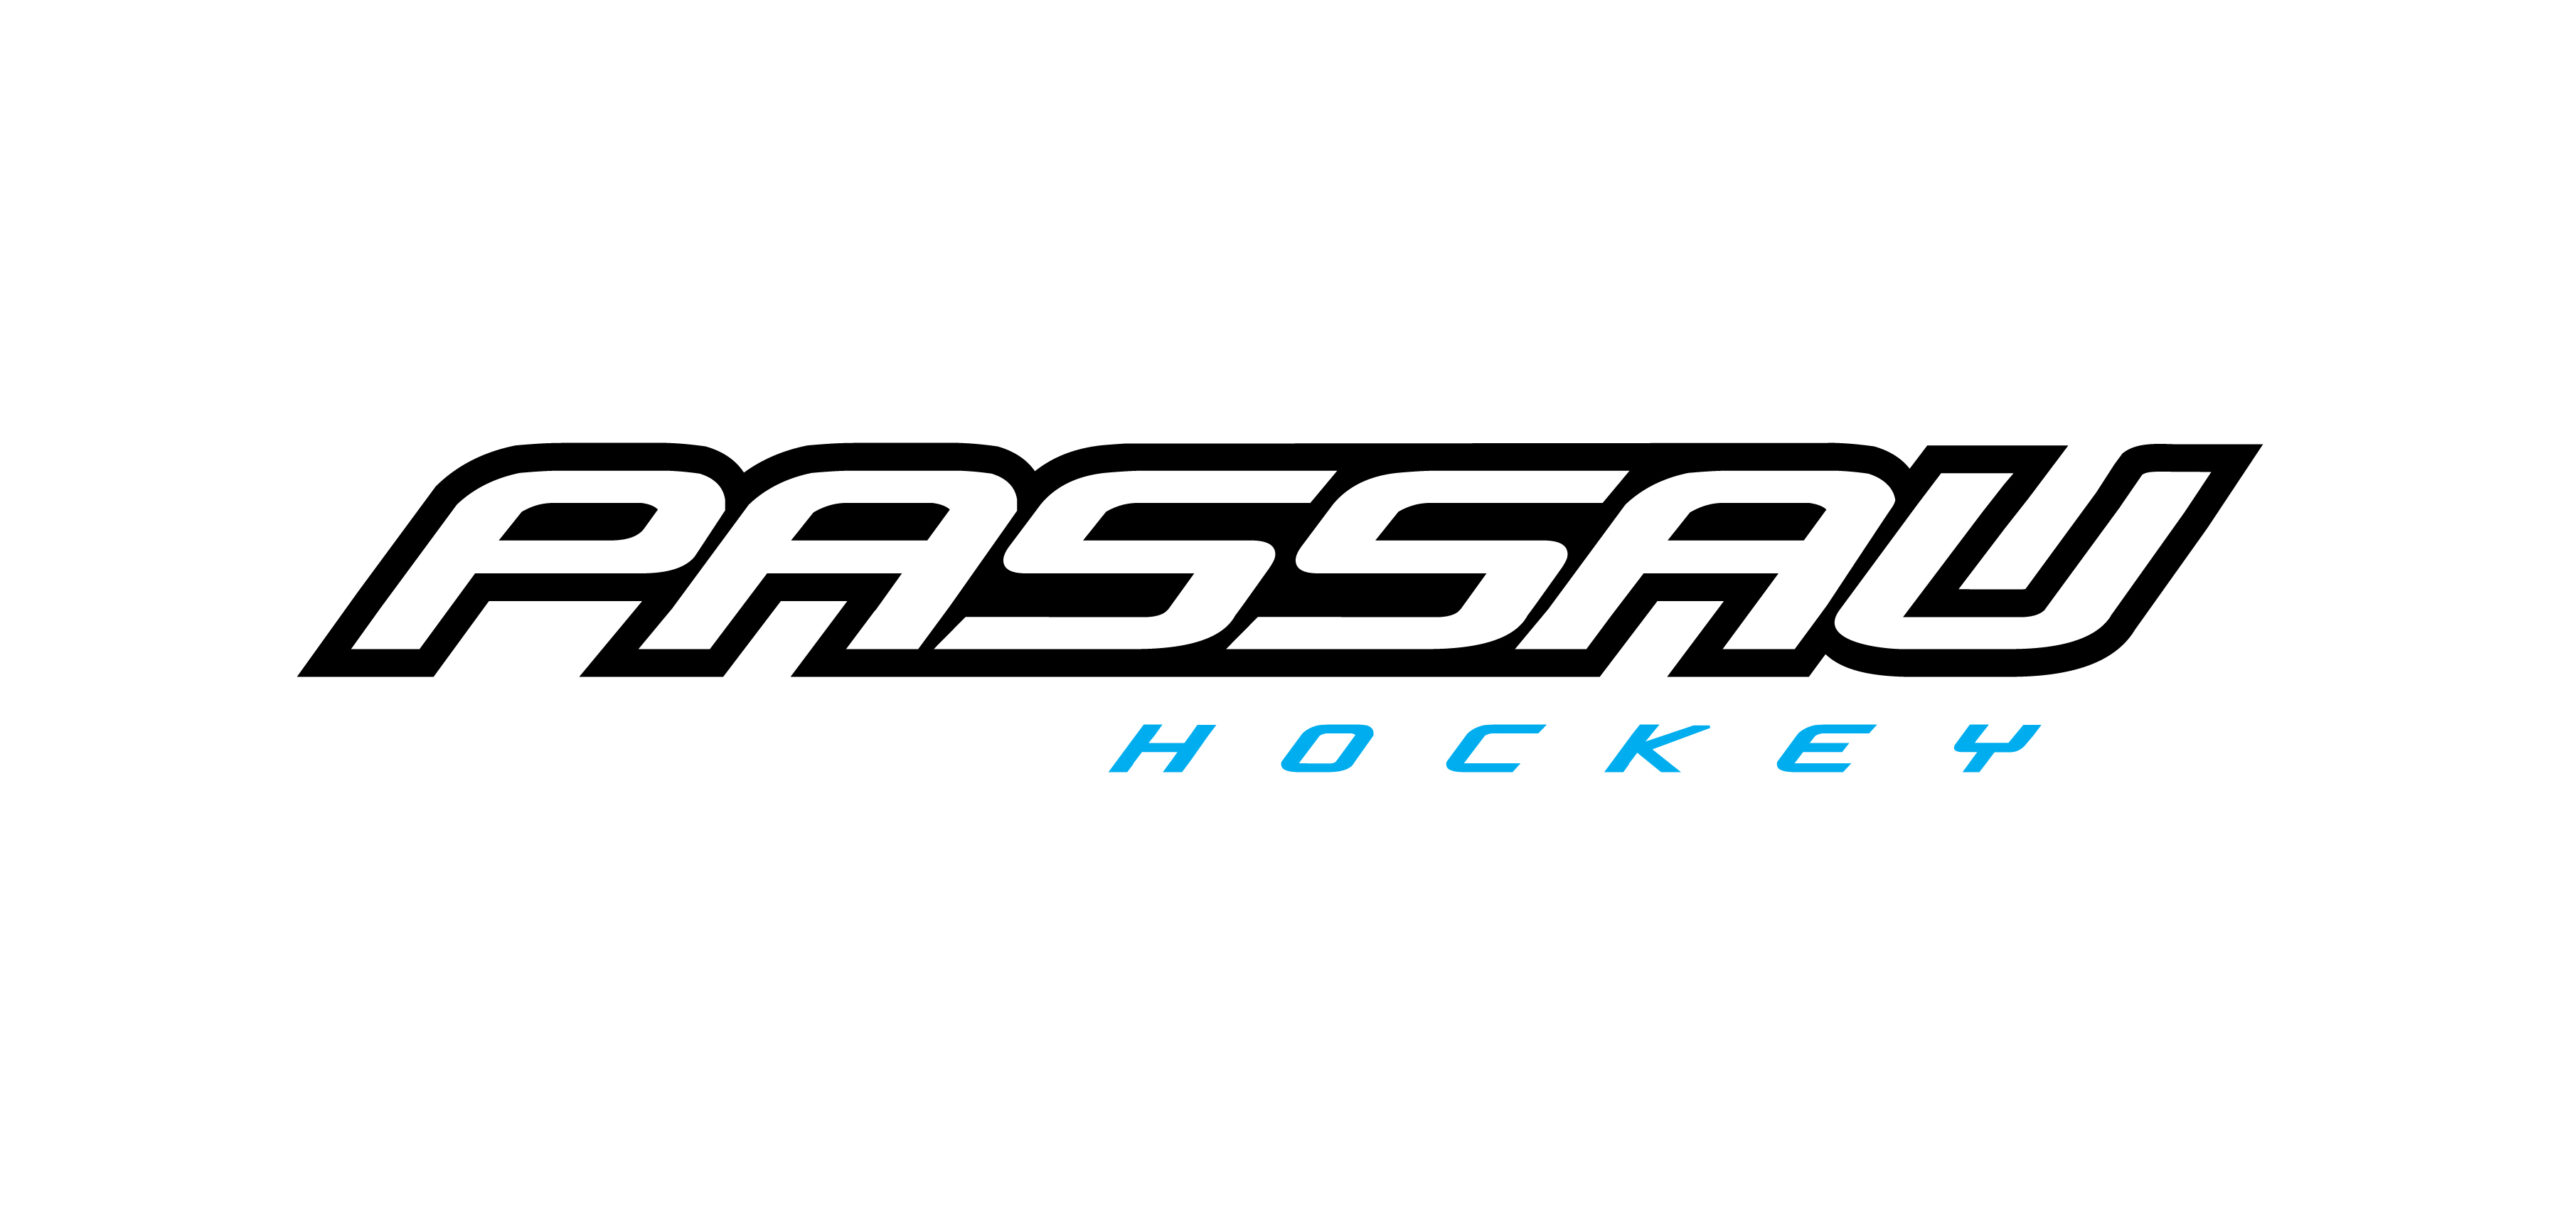 Passau_logo #1